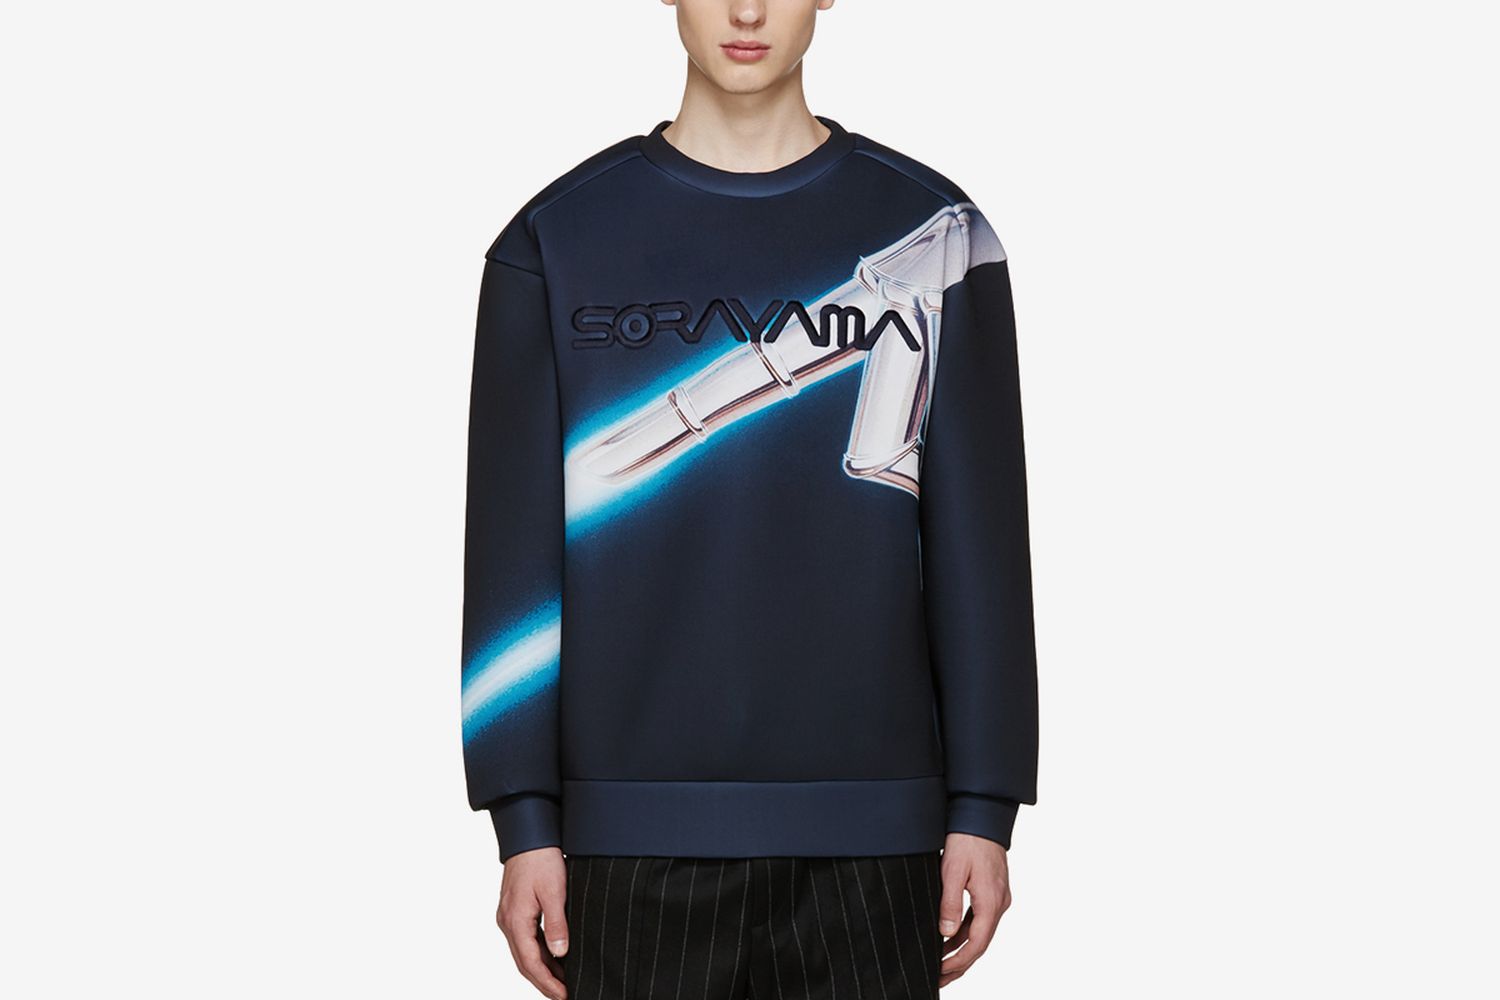 Neoprene Sorayama Sweater